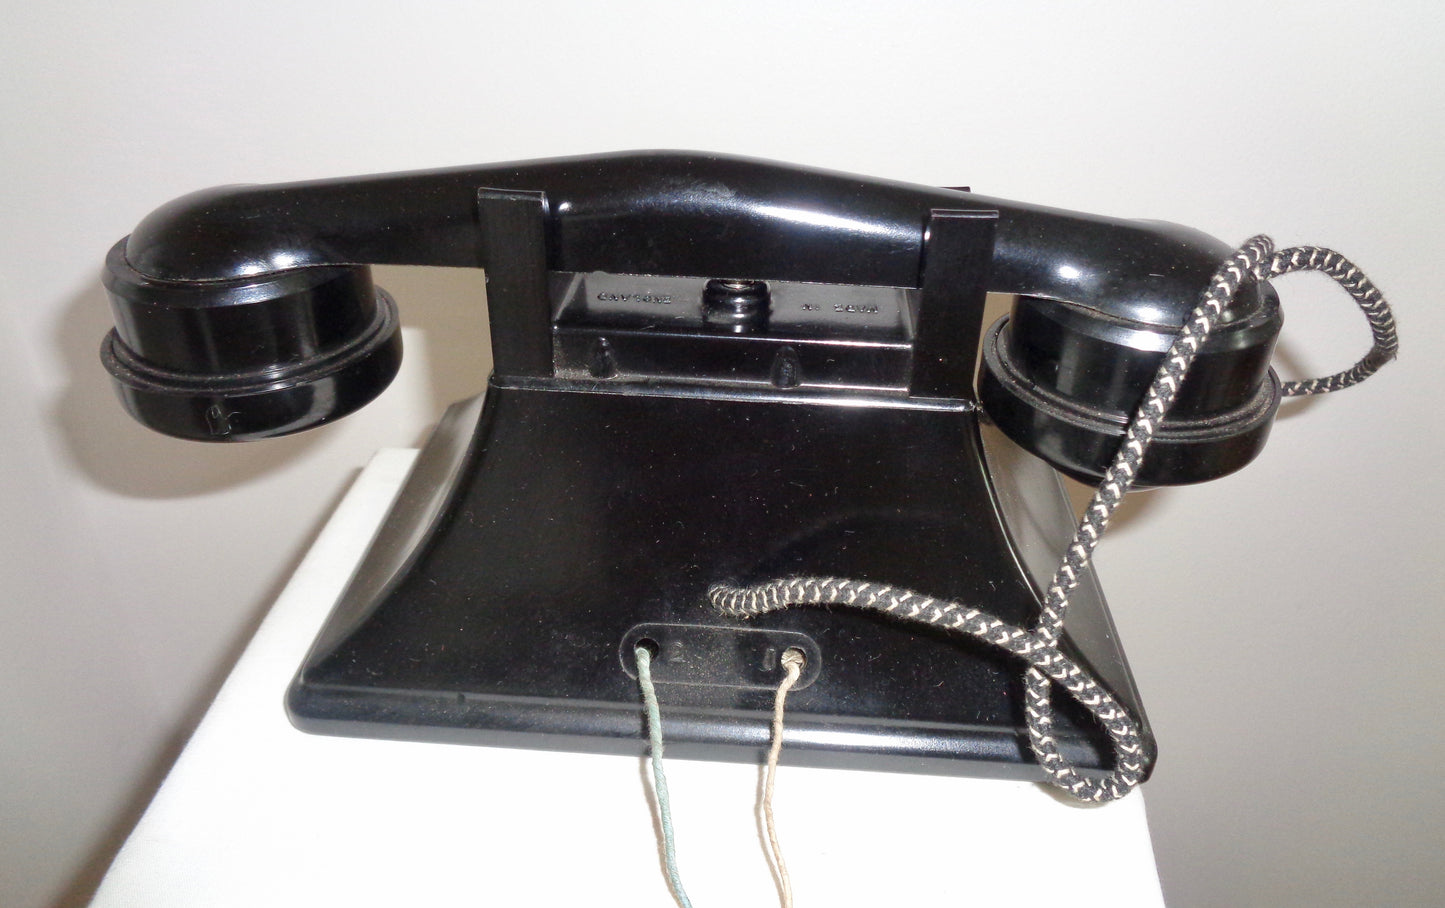 1930s Children's Arrow Intercom Telephone Set Vintage Toy